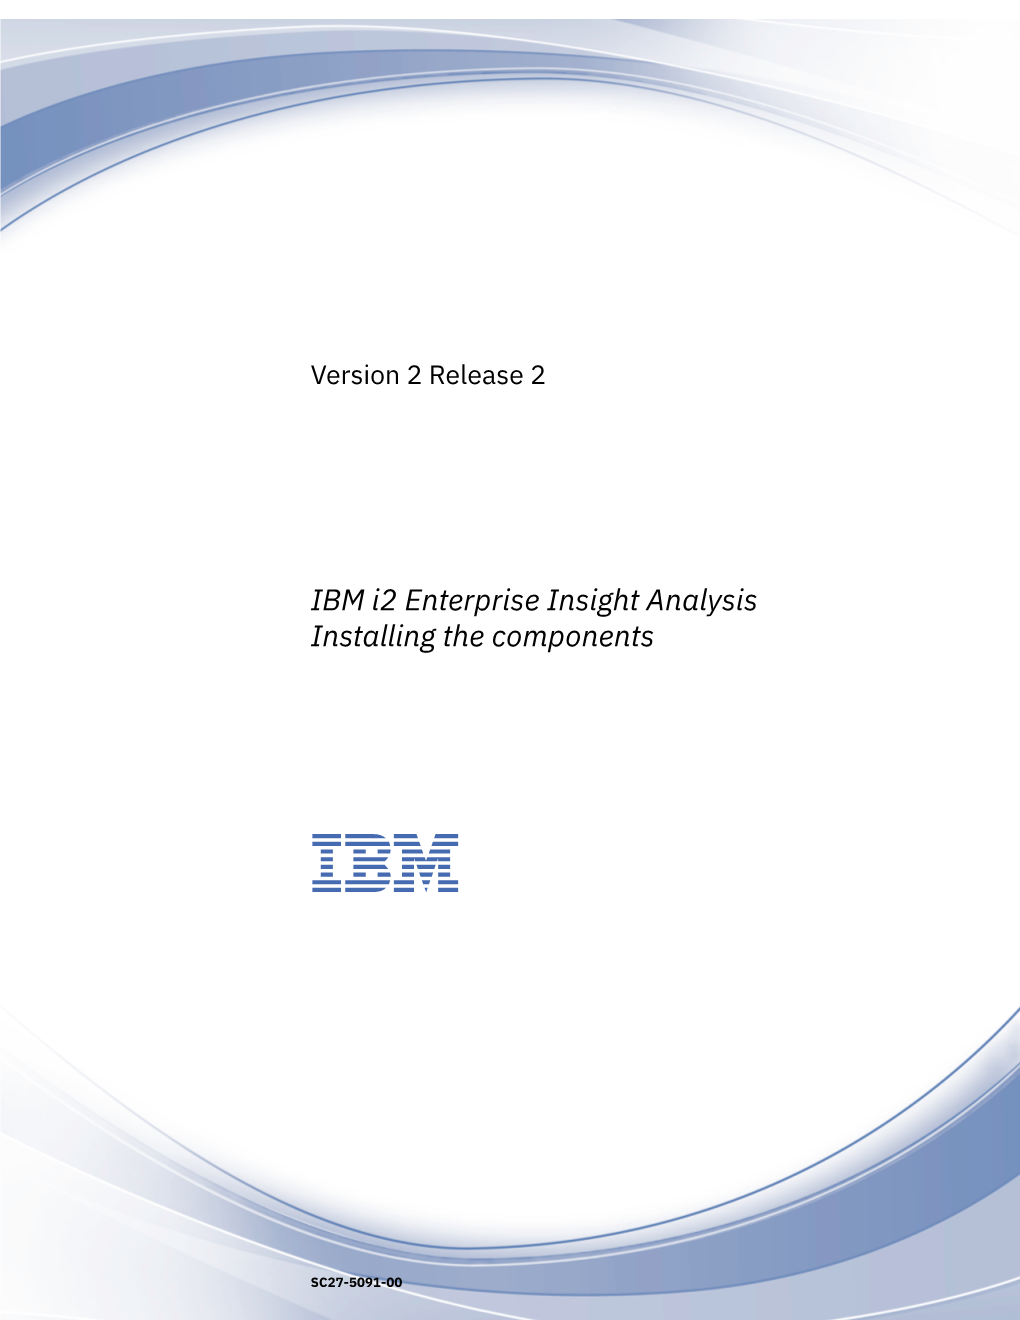 IBM I2 Enterprise Insight Analysis Installing the Components